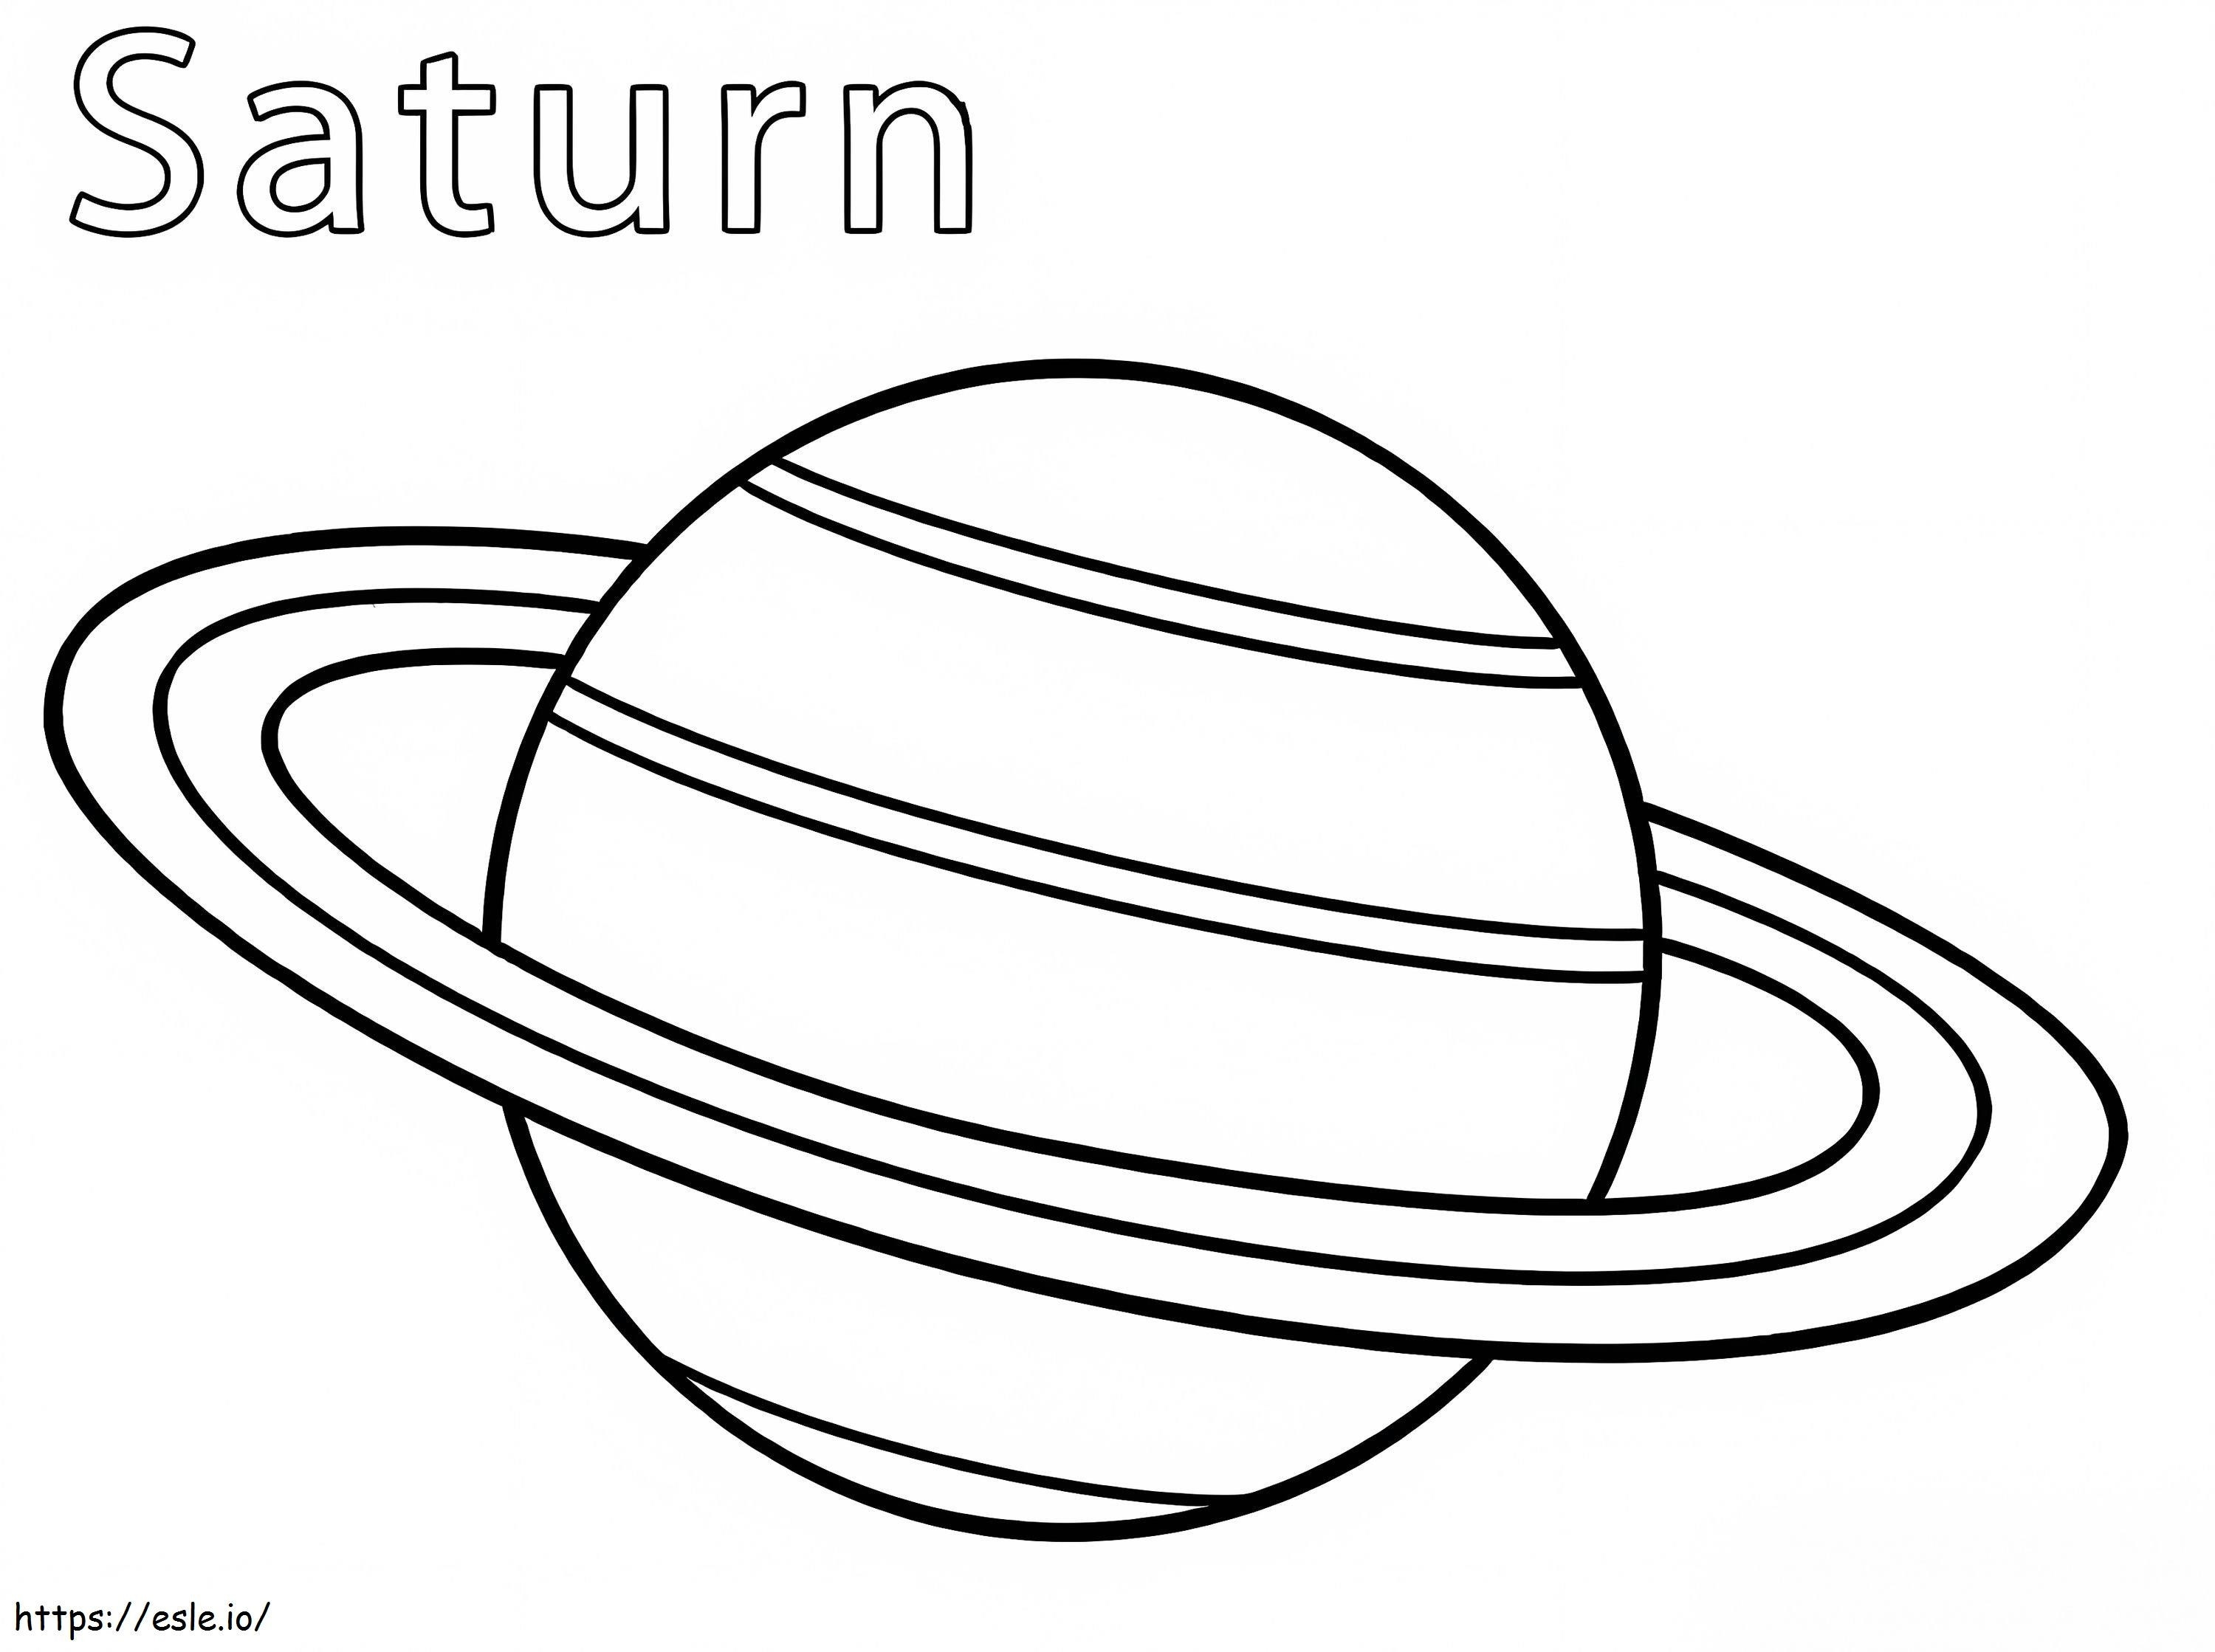 Planeta Saturn2 kolorowanka